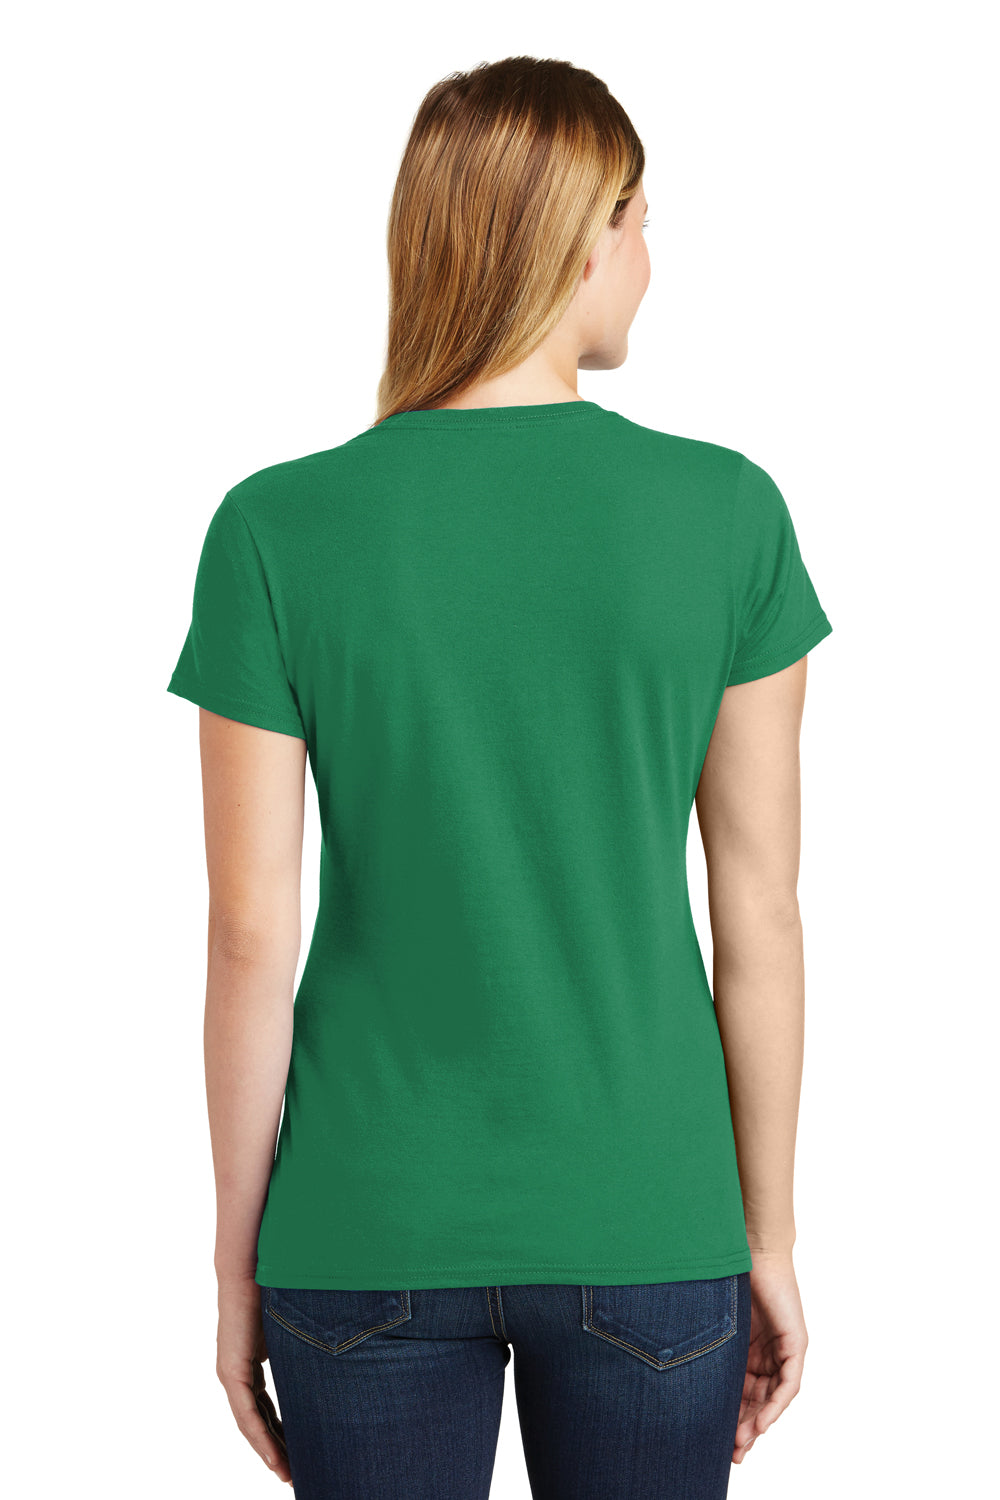 Port & Company LPC450 Womens Fan Favorite Short Sleeve Crewneck T-Shirt Kelly Green Back